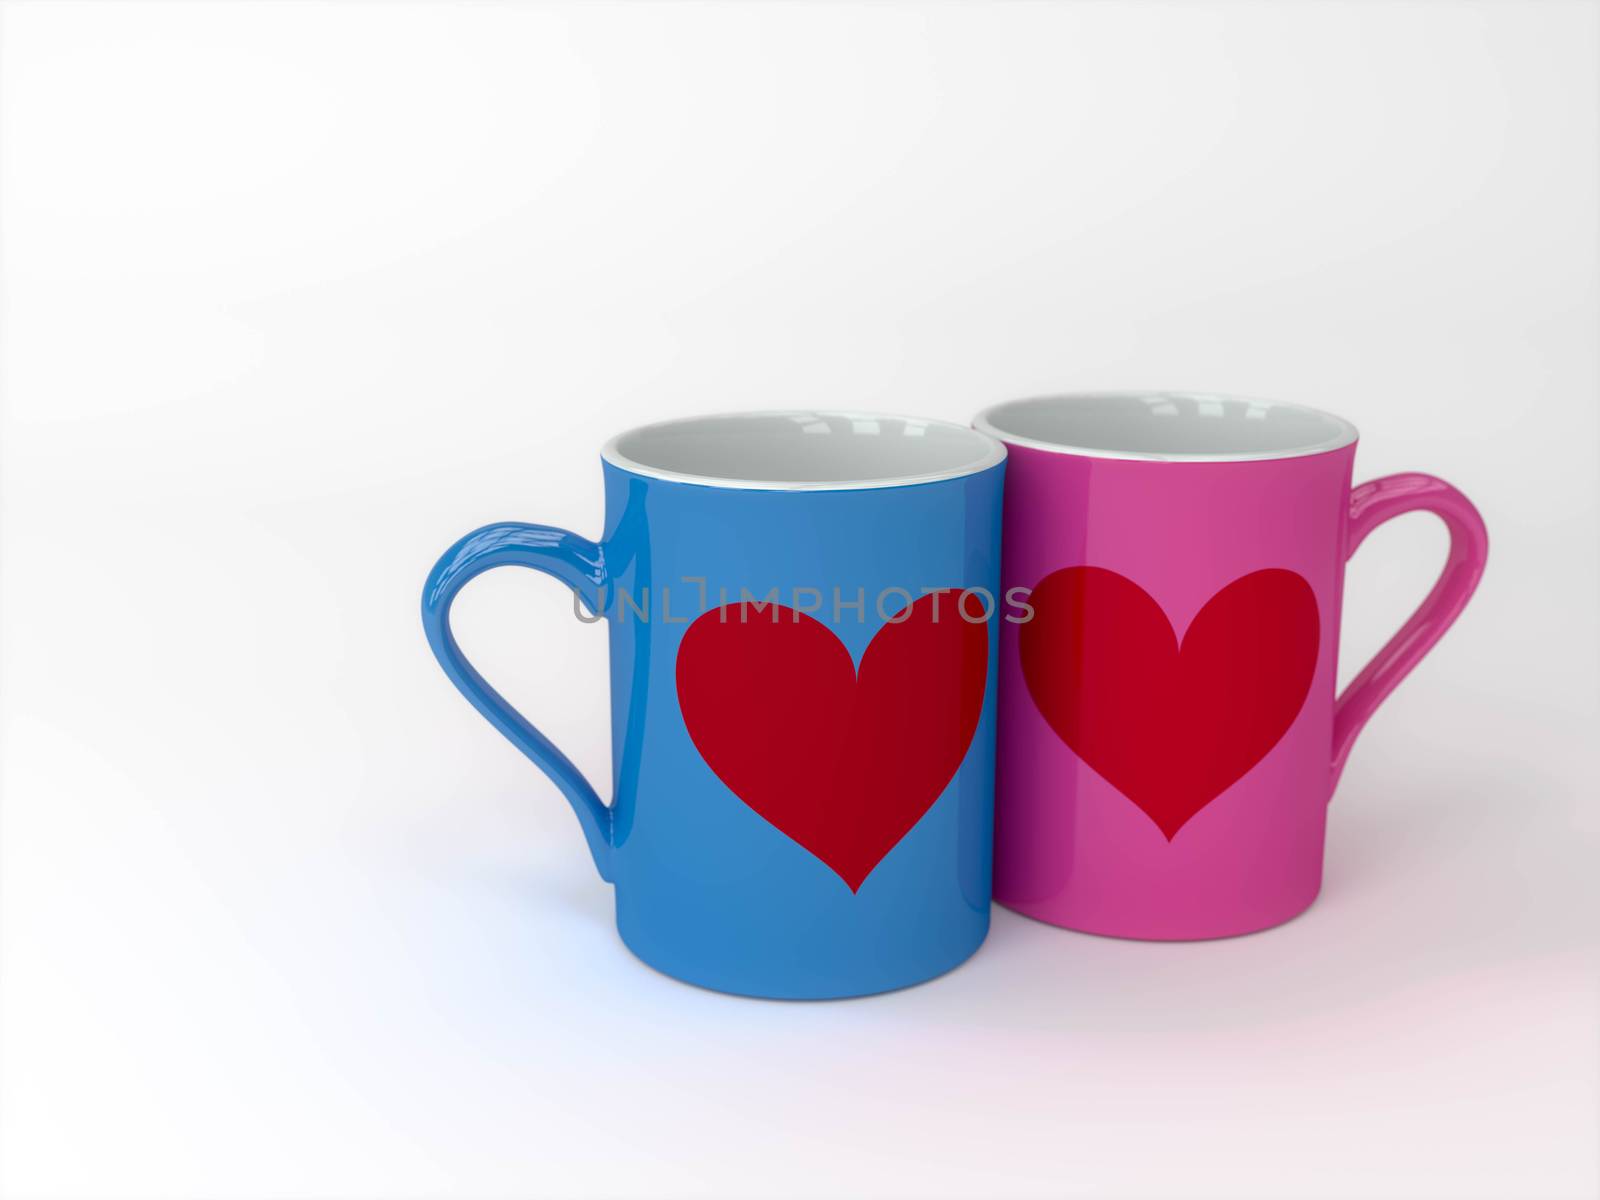 Couples' Mugs,Love couple coffee cups,3DCG,3D rendering, Render scene. 3D illustration. 3D illustration